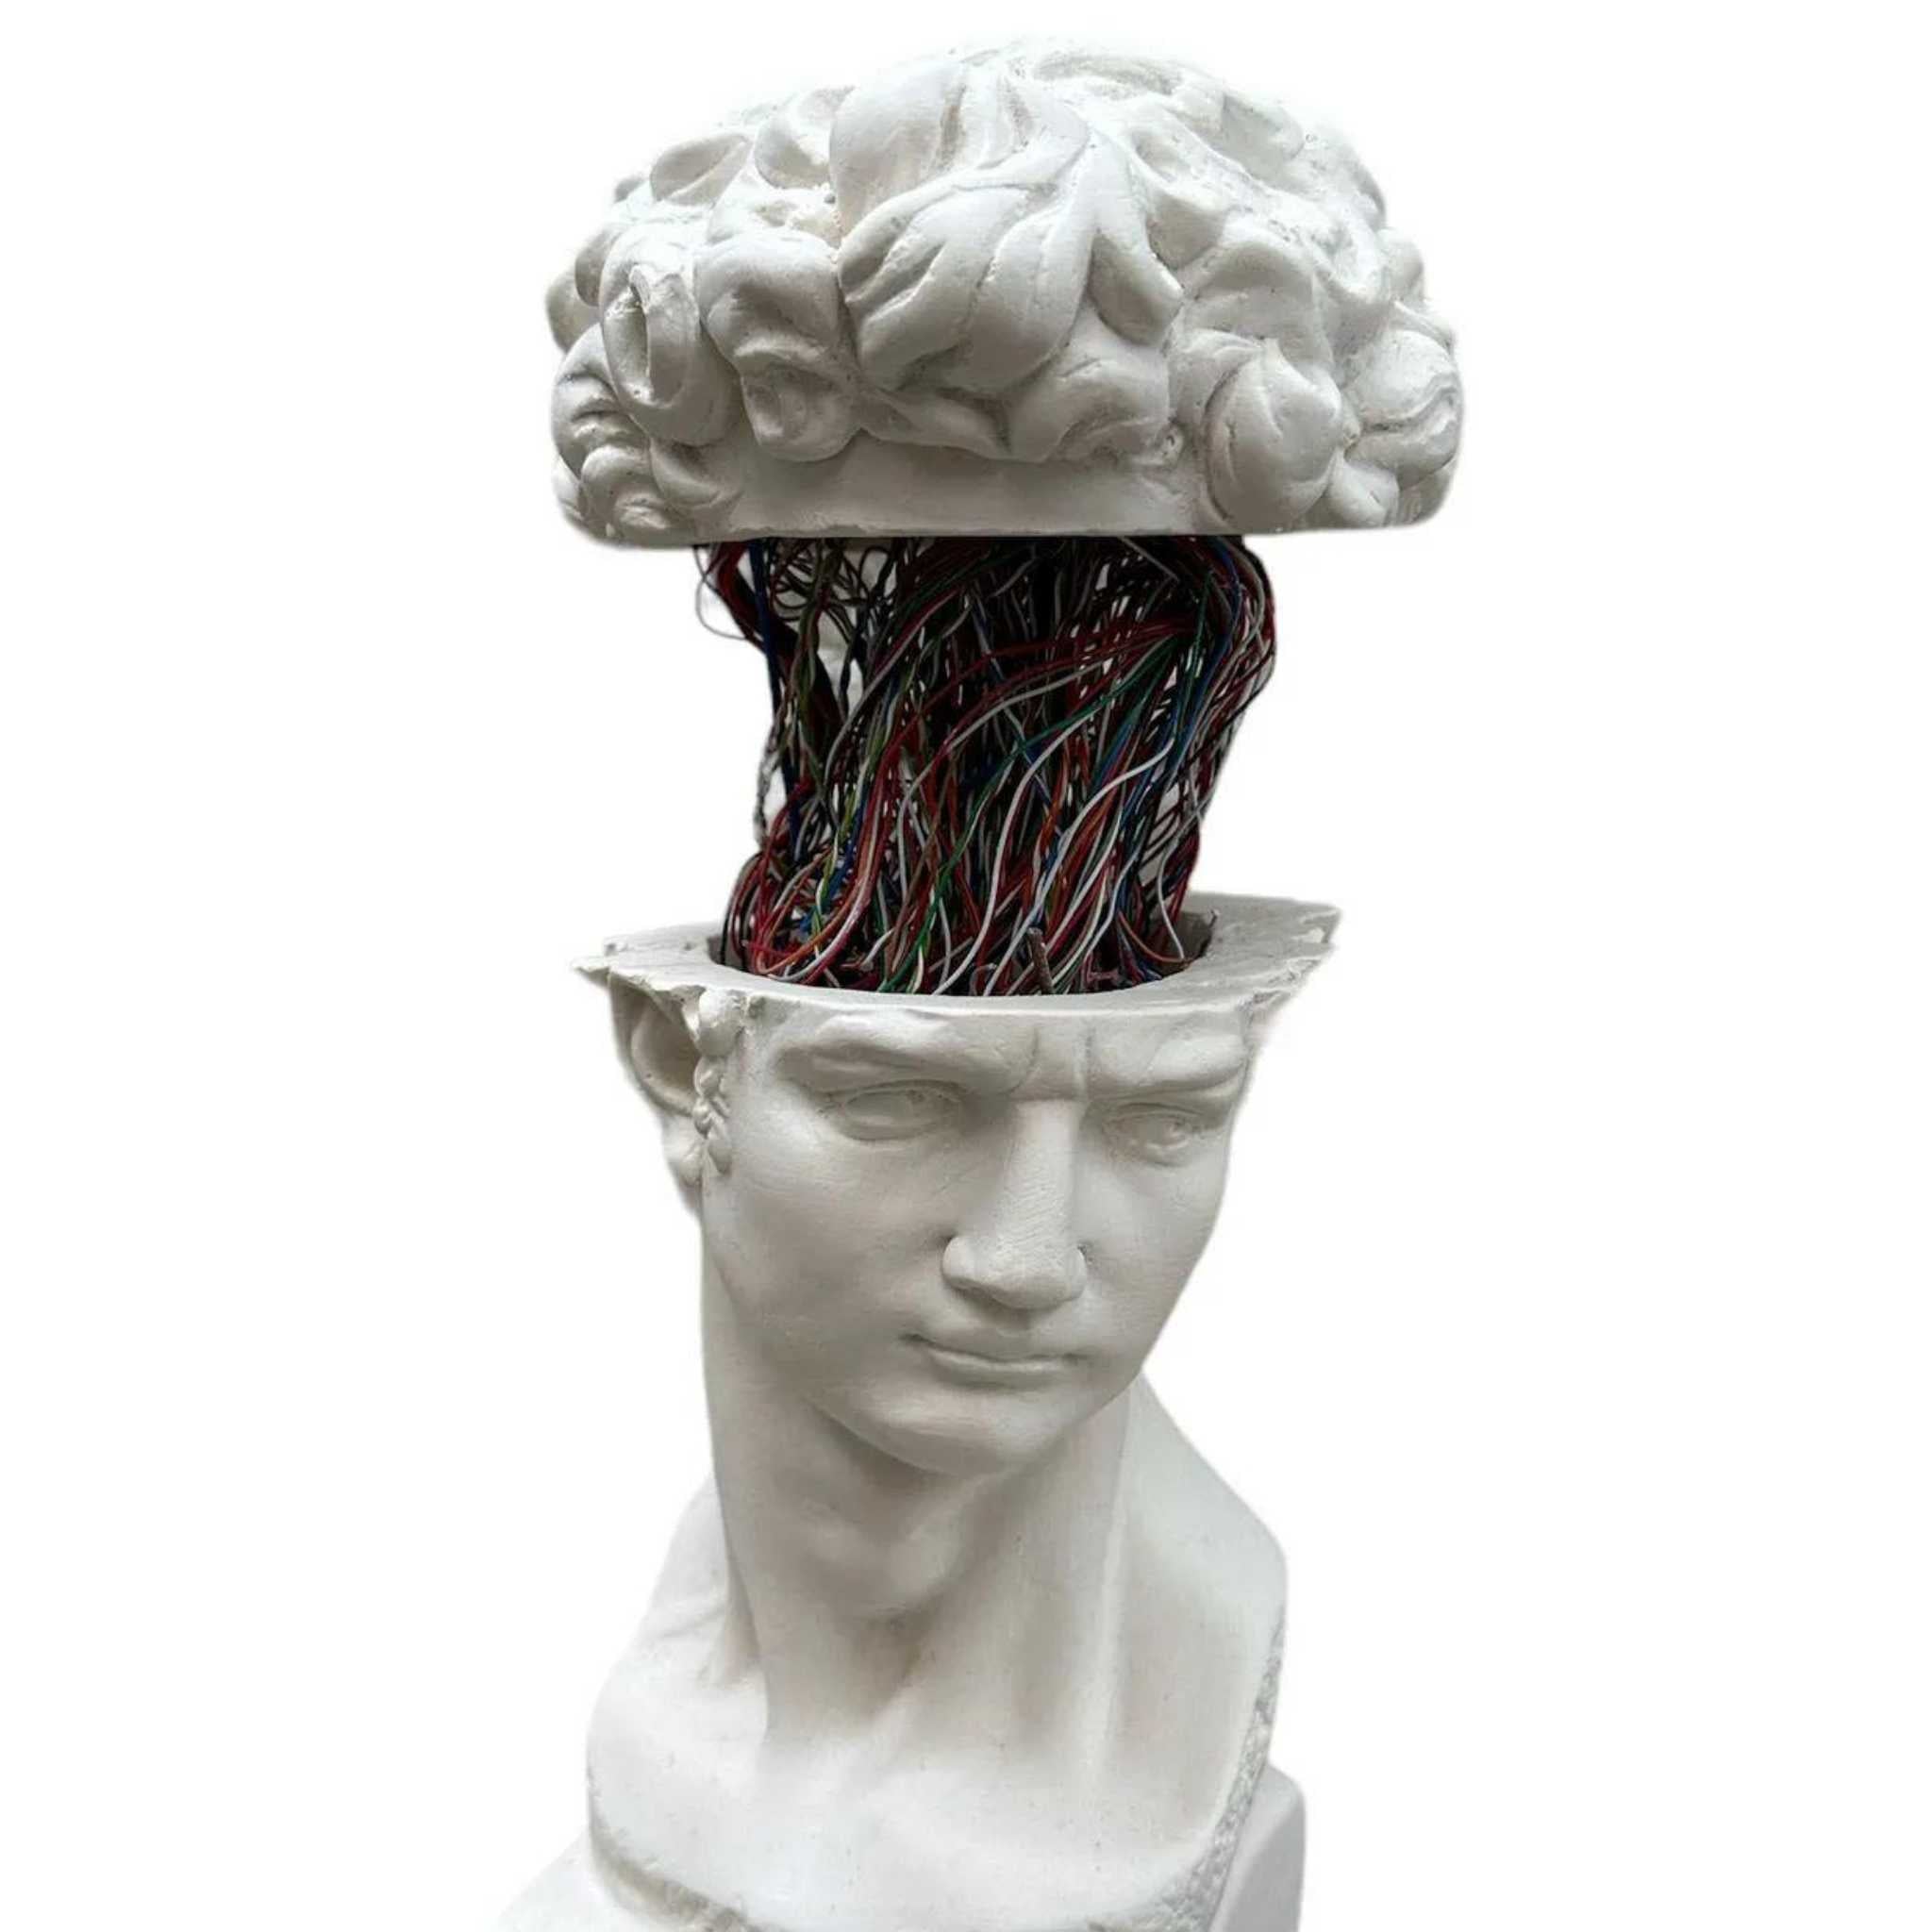 David Colourful Brain Medium